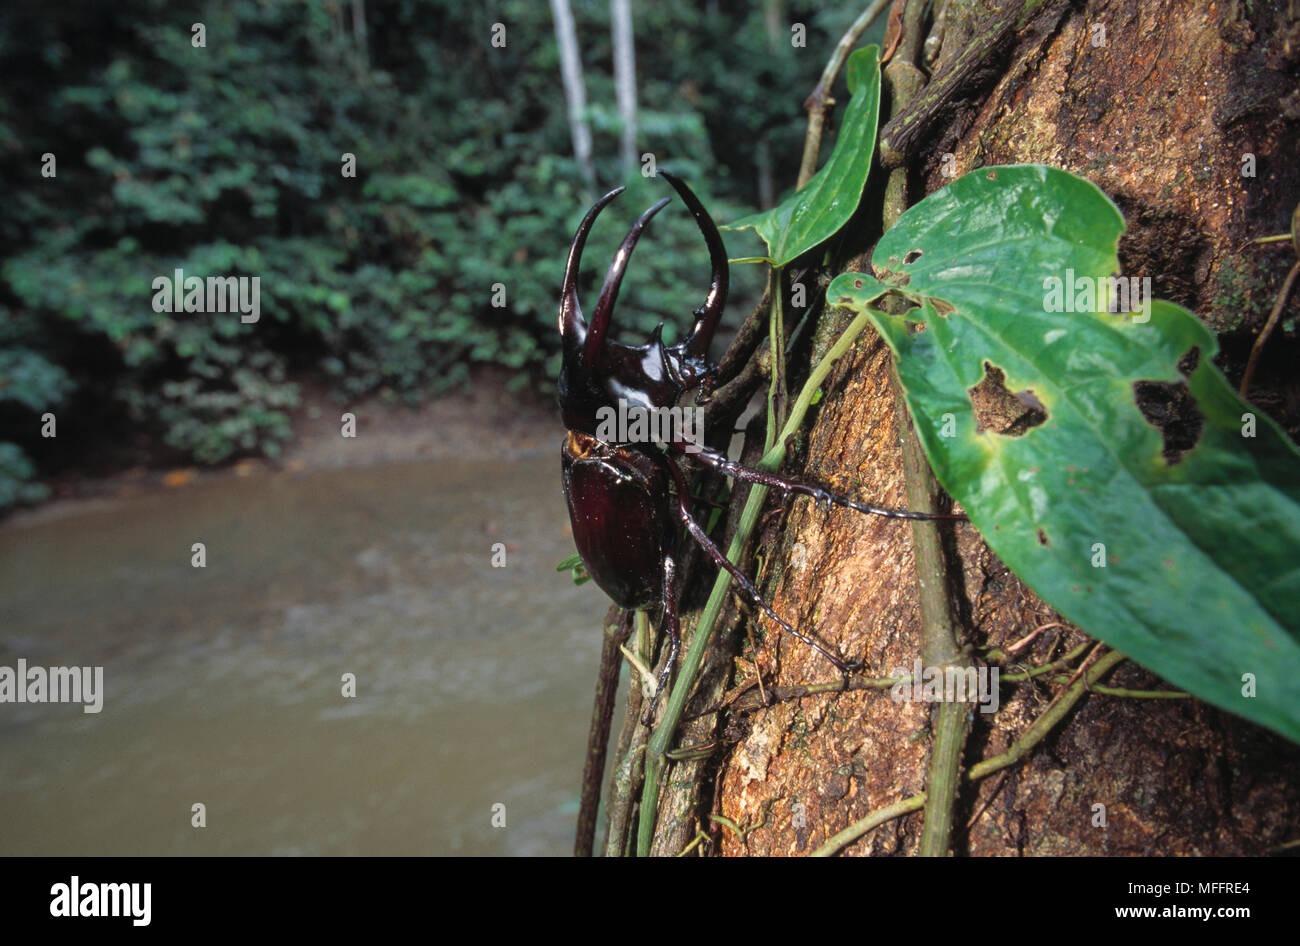 THREE-HORNED RHINOCEROS BEETLE Chalcosoma moellenkampi Borneo Stock Photo